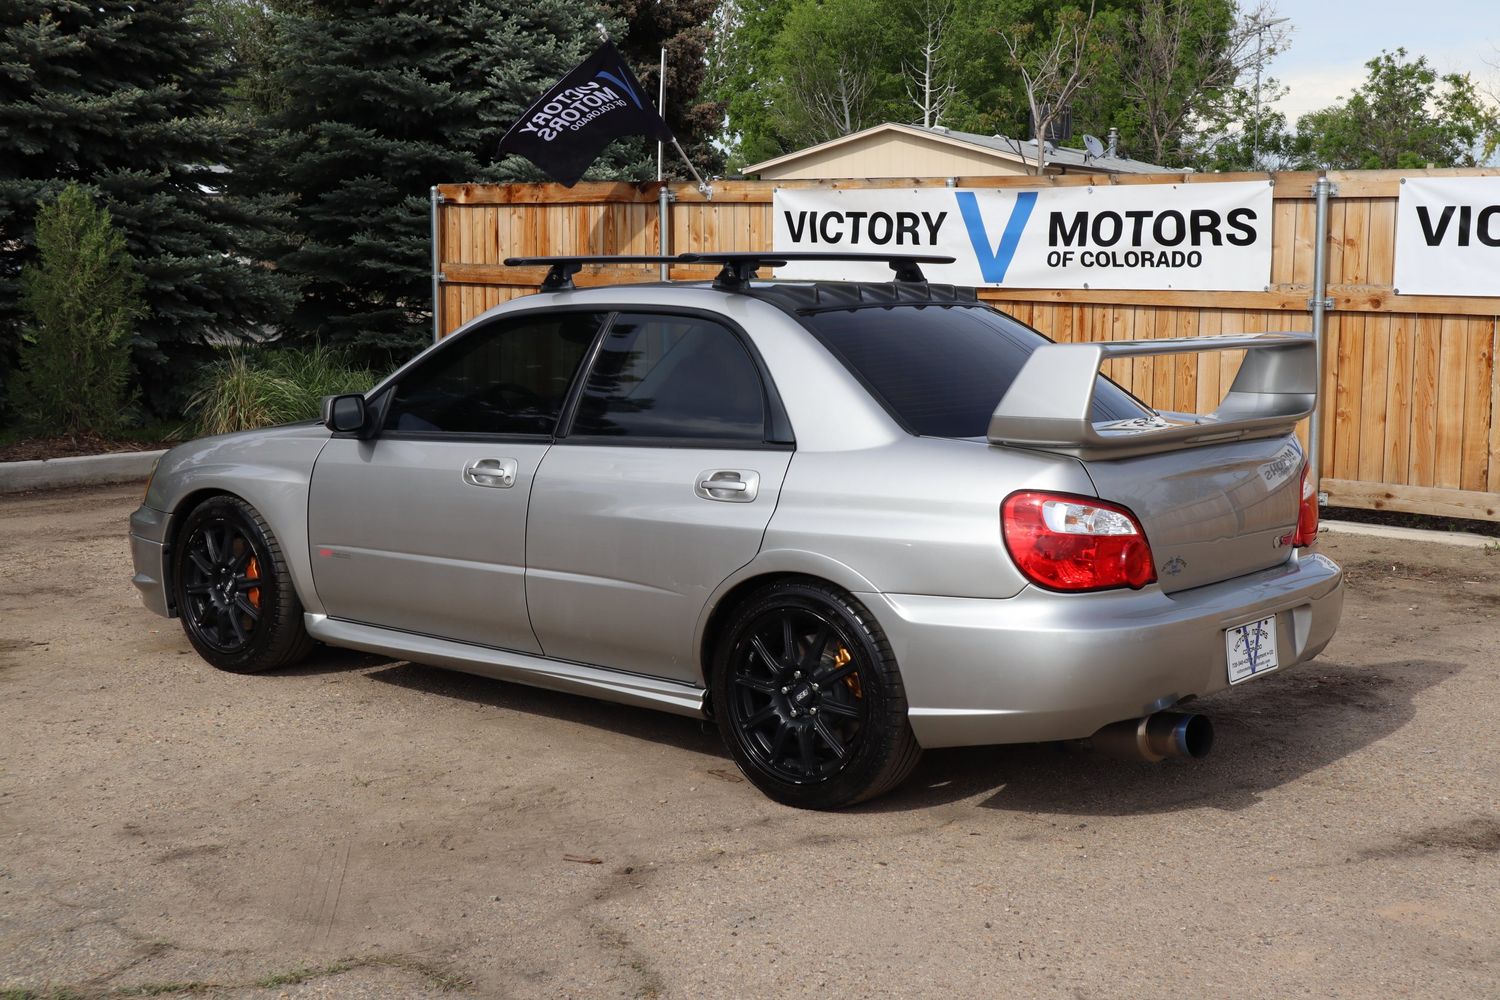 2005 Subaru Impreza WRX STI Victory Motors of Colorado